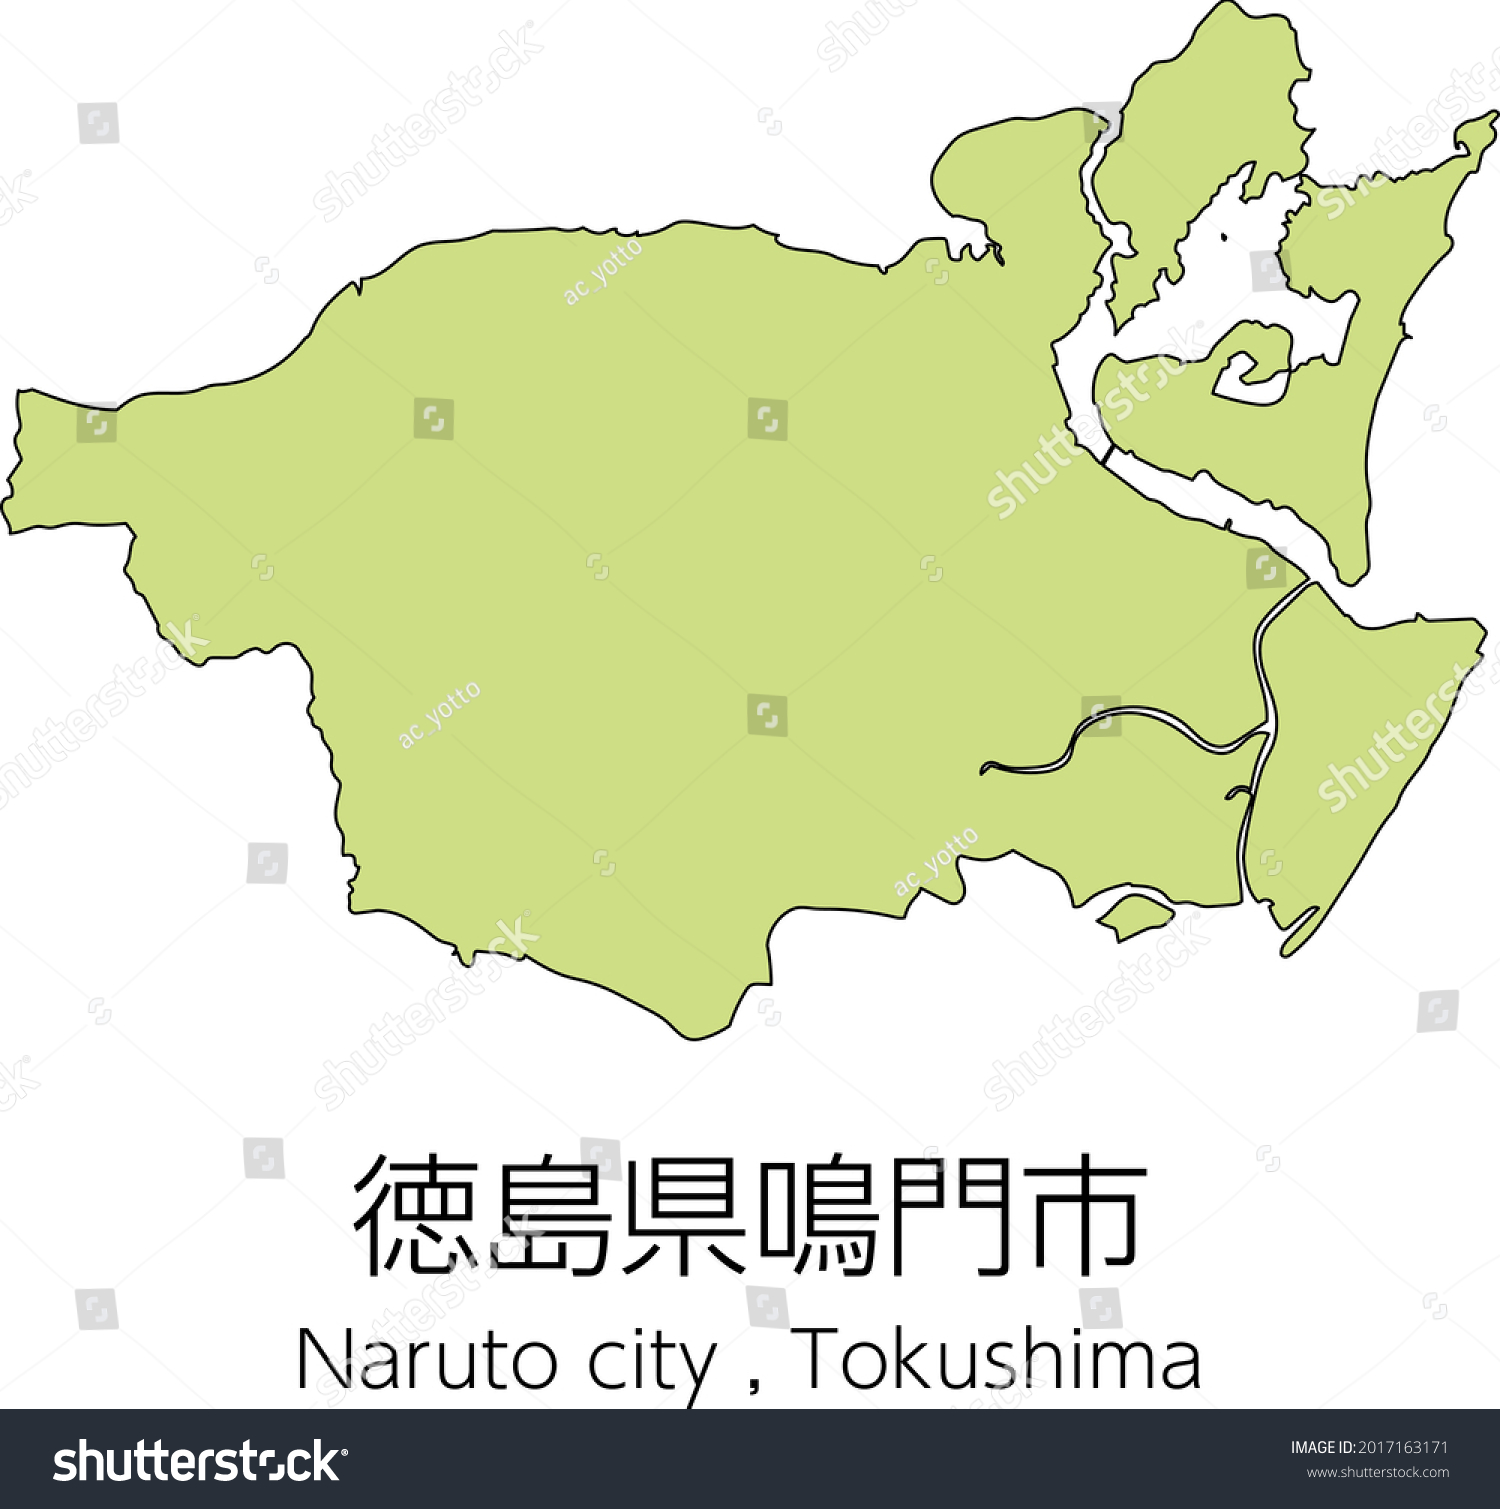 SVG of Map of Naruto City, Tokushima Prefecture, Japan.Translation: 